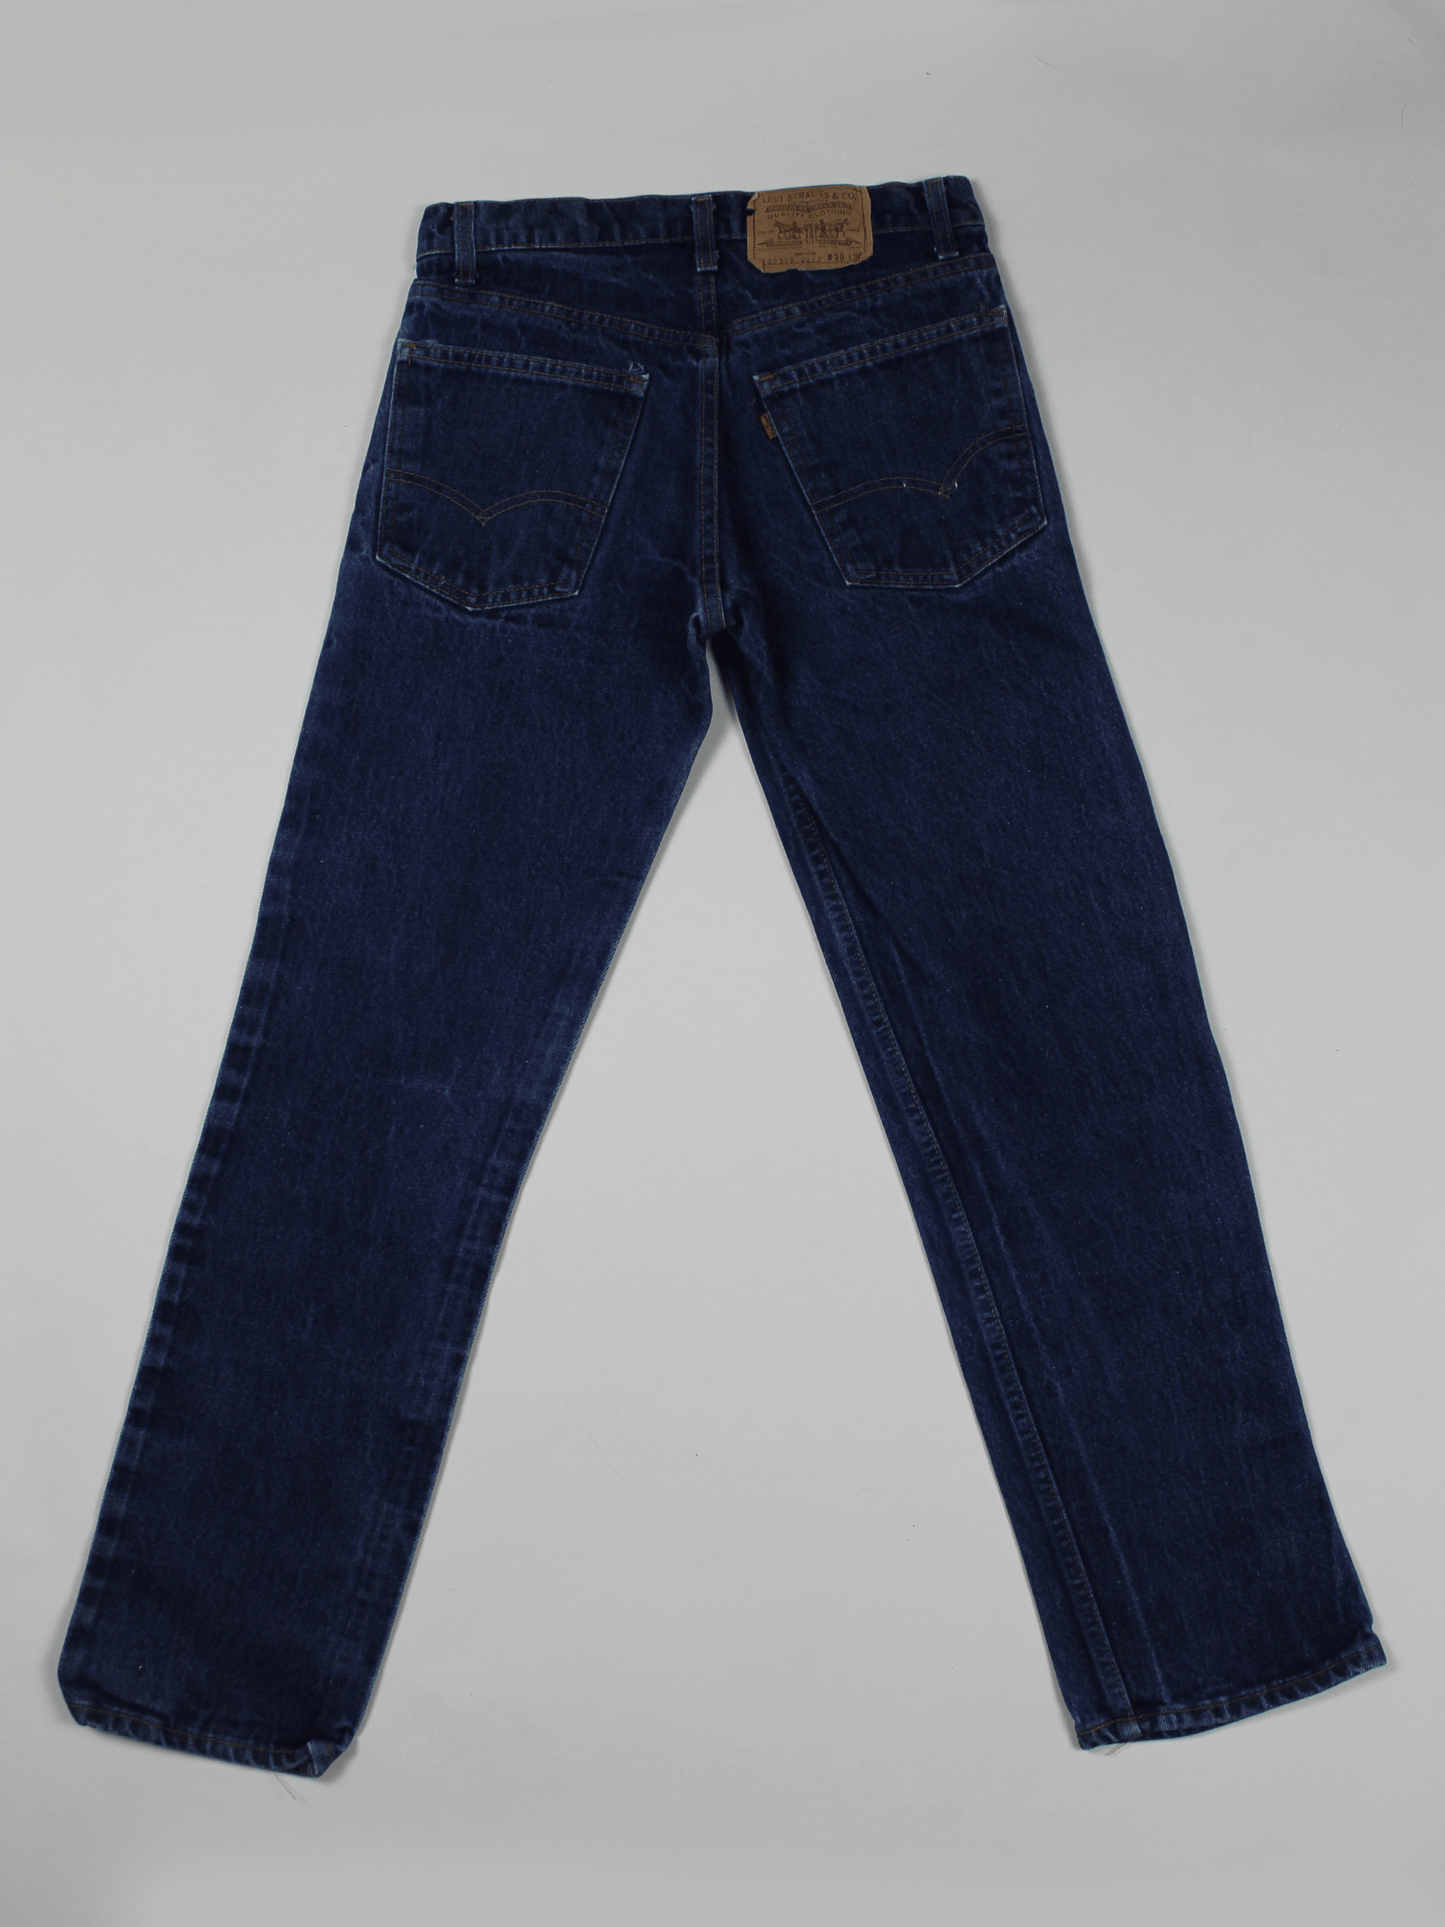 Levi's 505 Vintage Jeans (Orange Label)